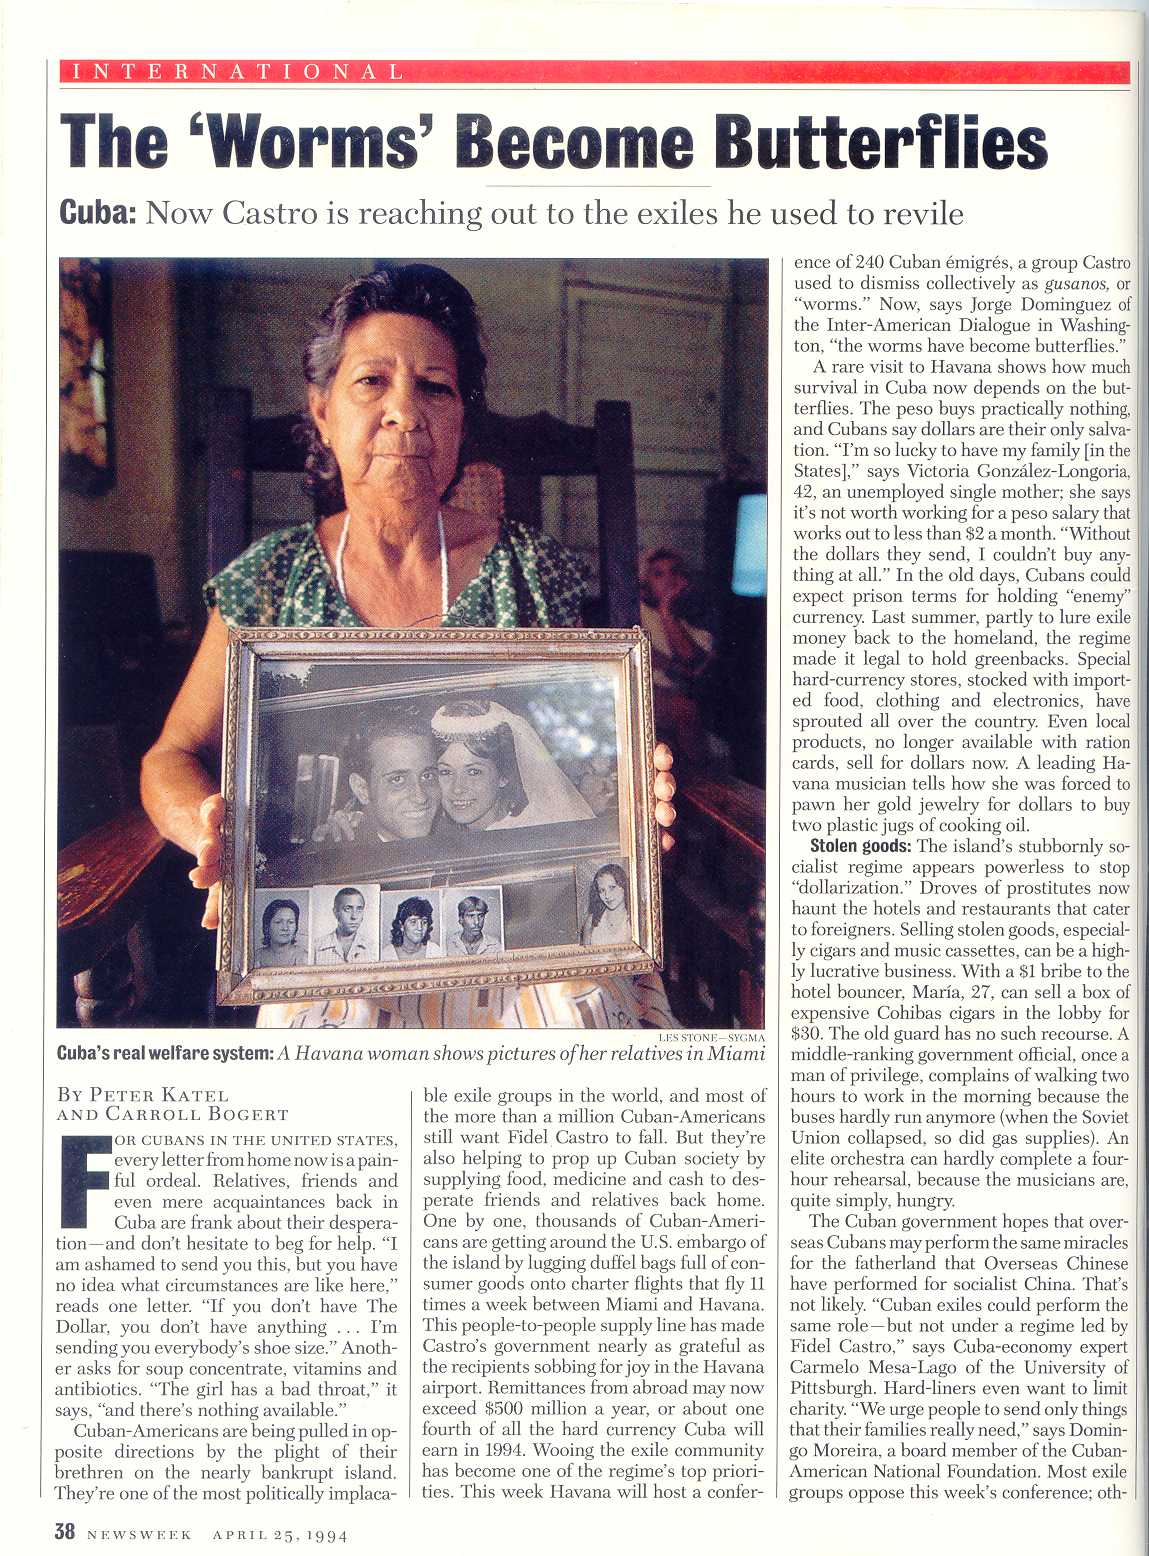 Peter Katel in Havana, Cuba – NEWSWEEK Magazine (1994)